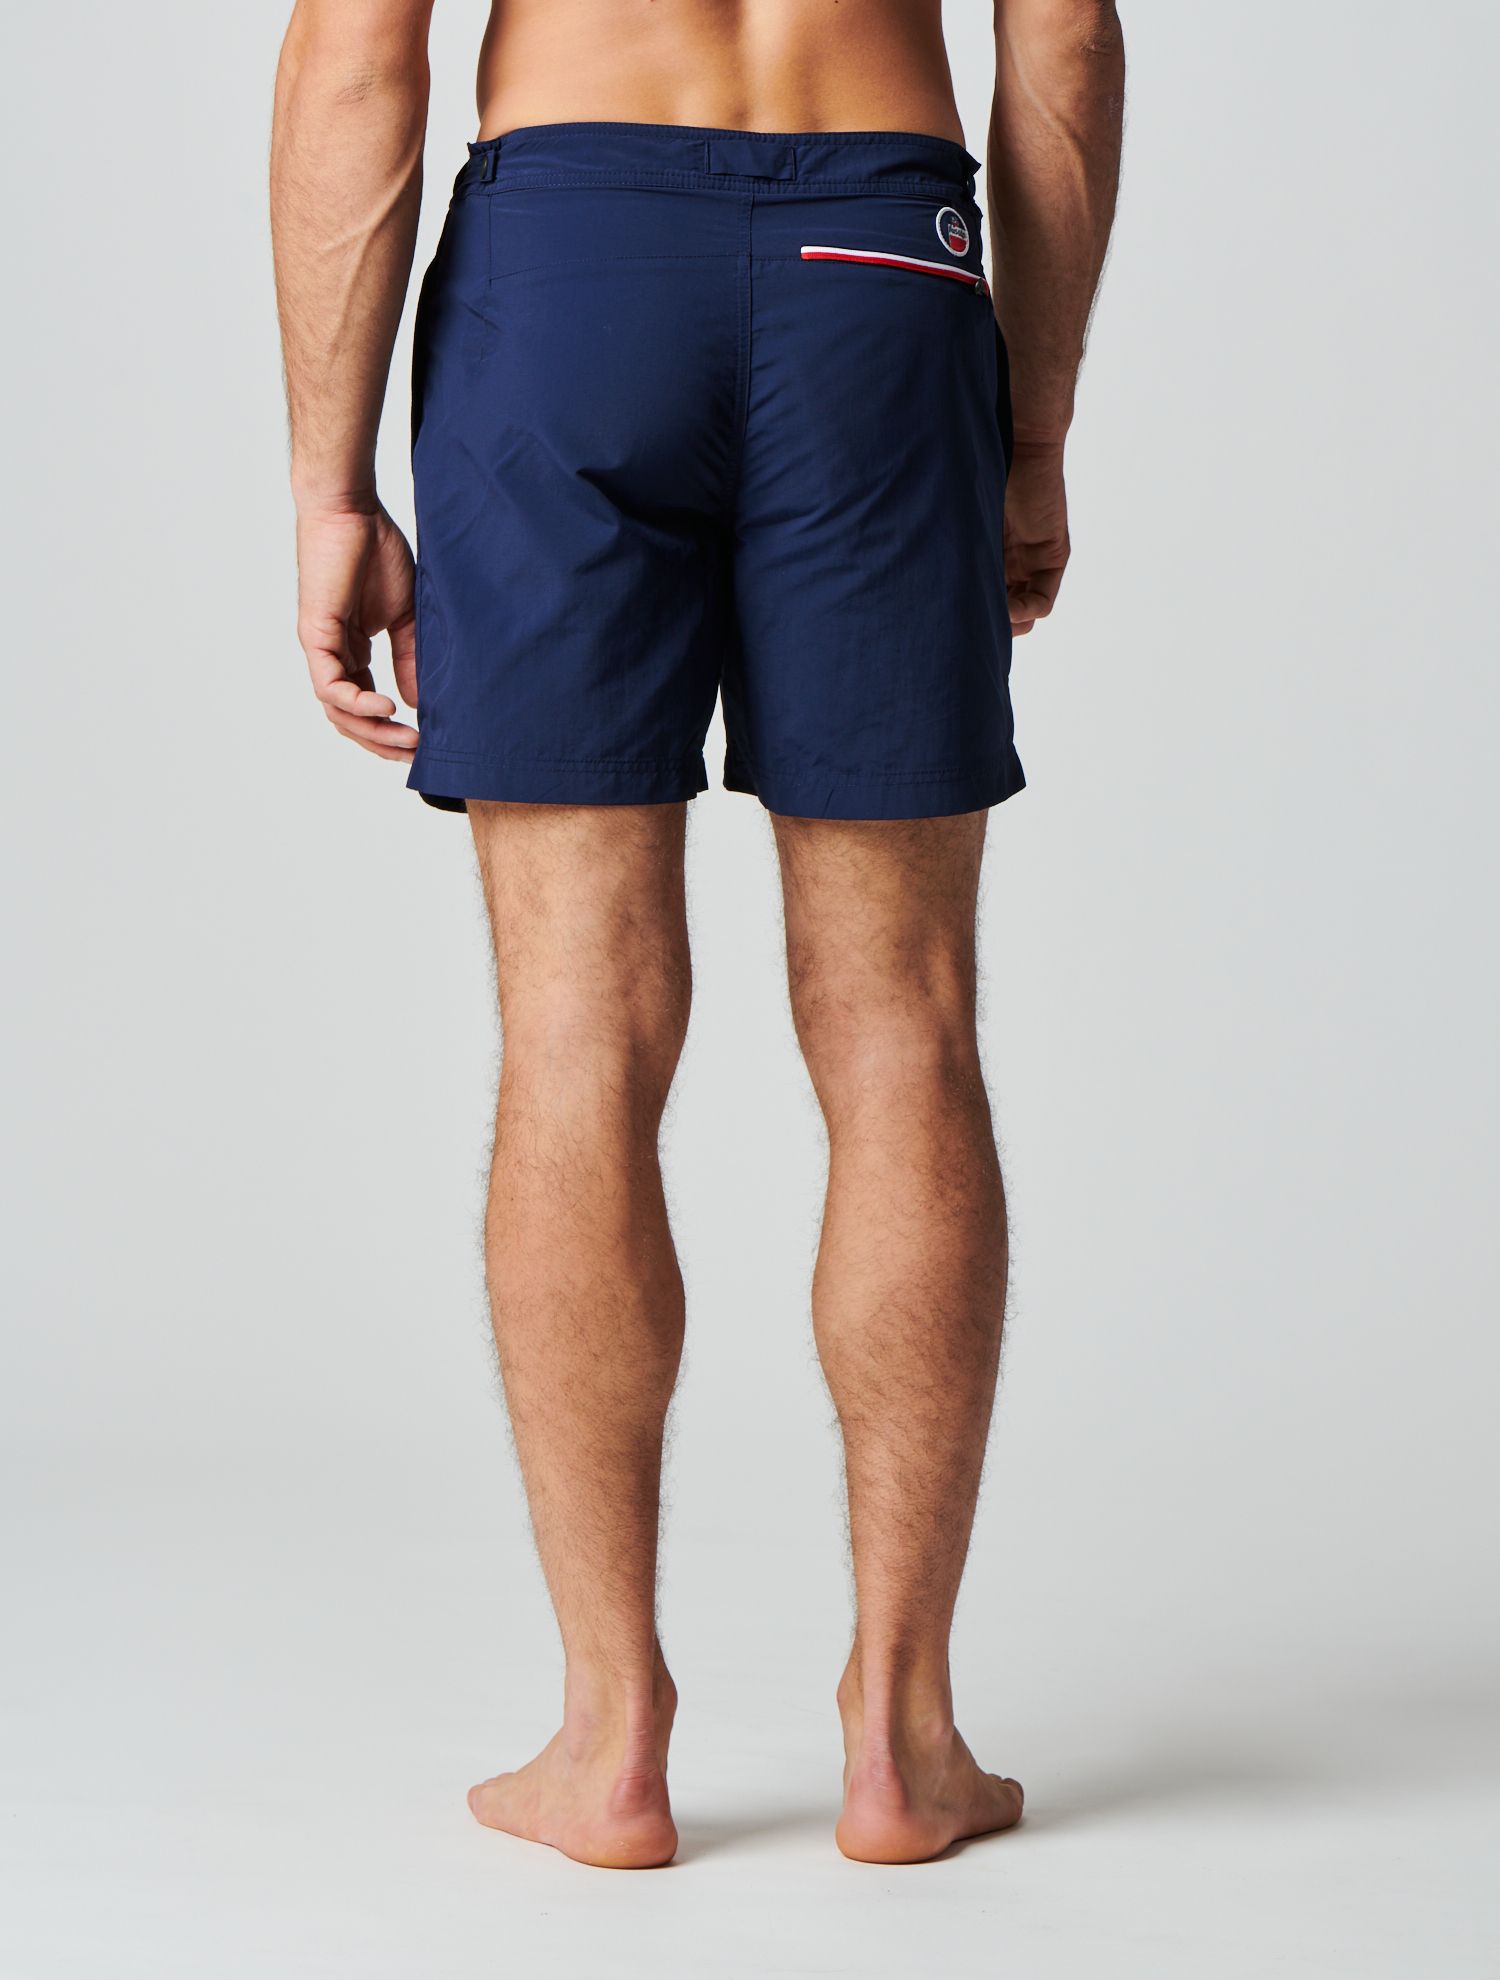 Fusalp - Dax Short : Lightweight swim shorts with zip pocket for men